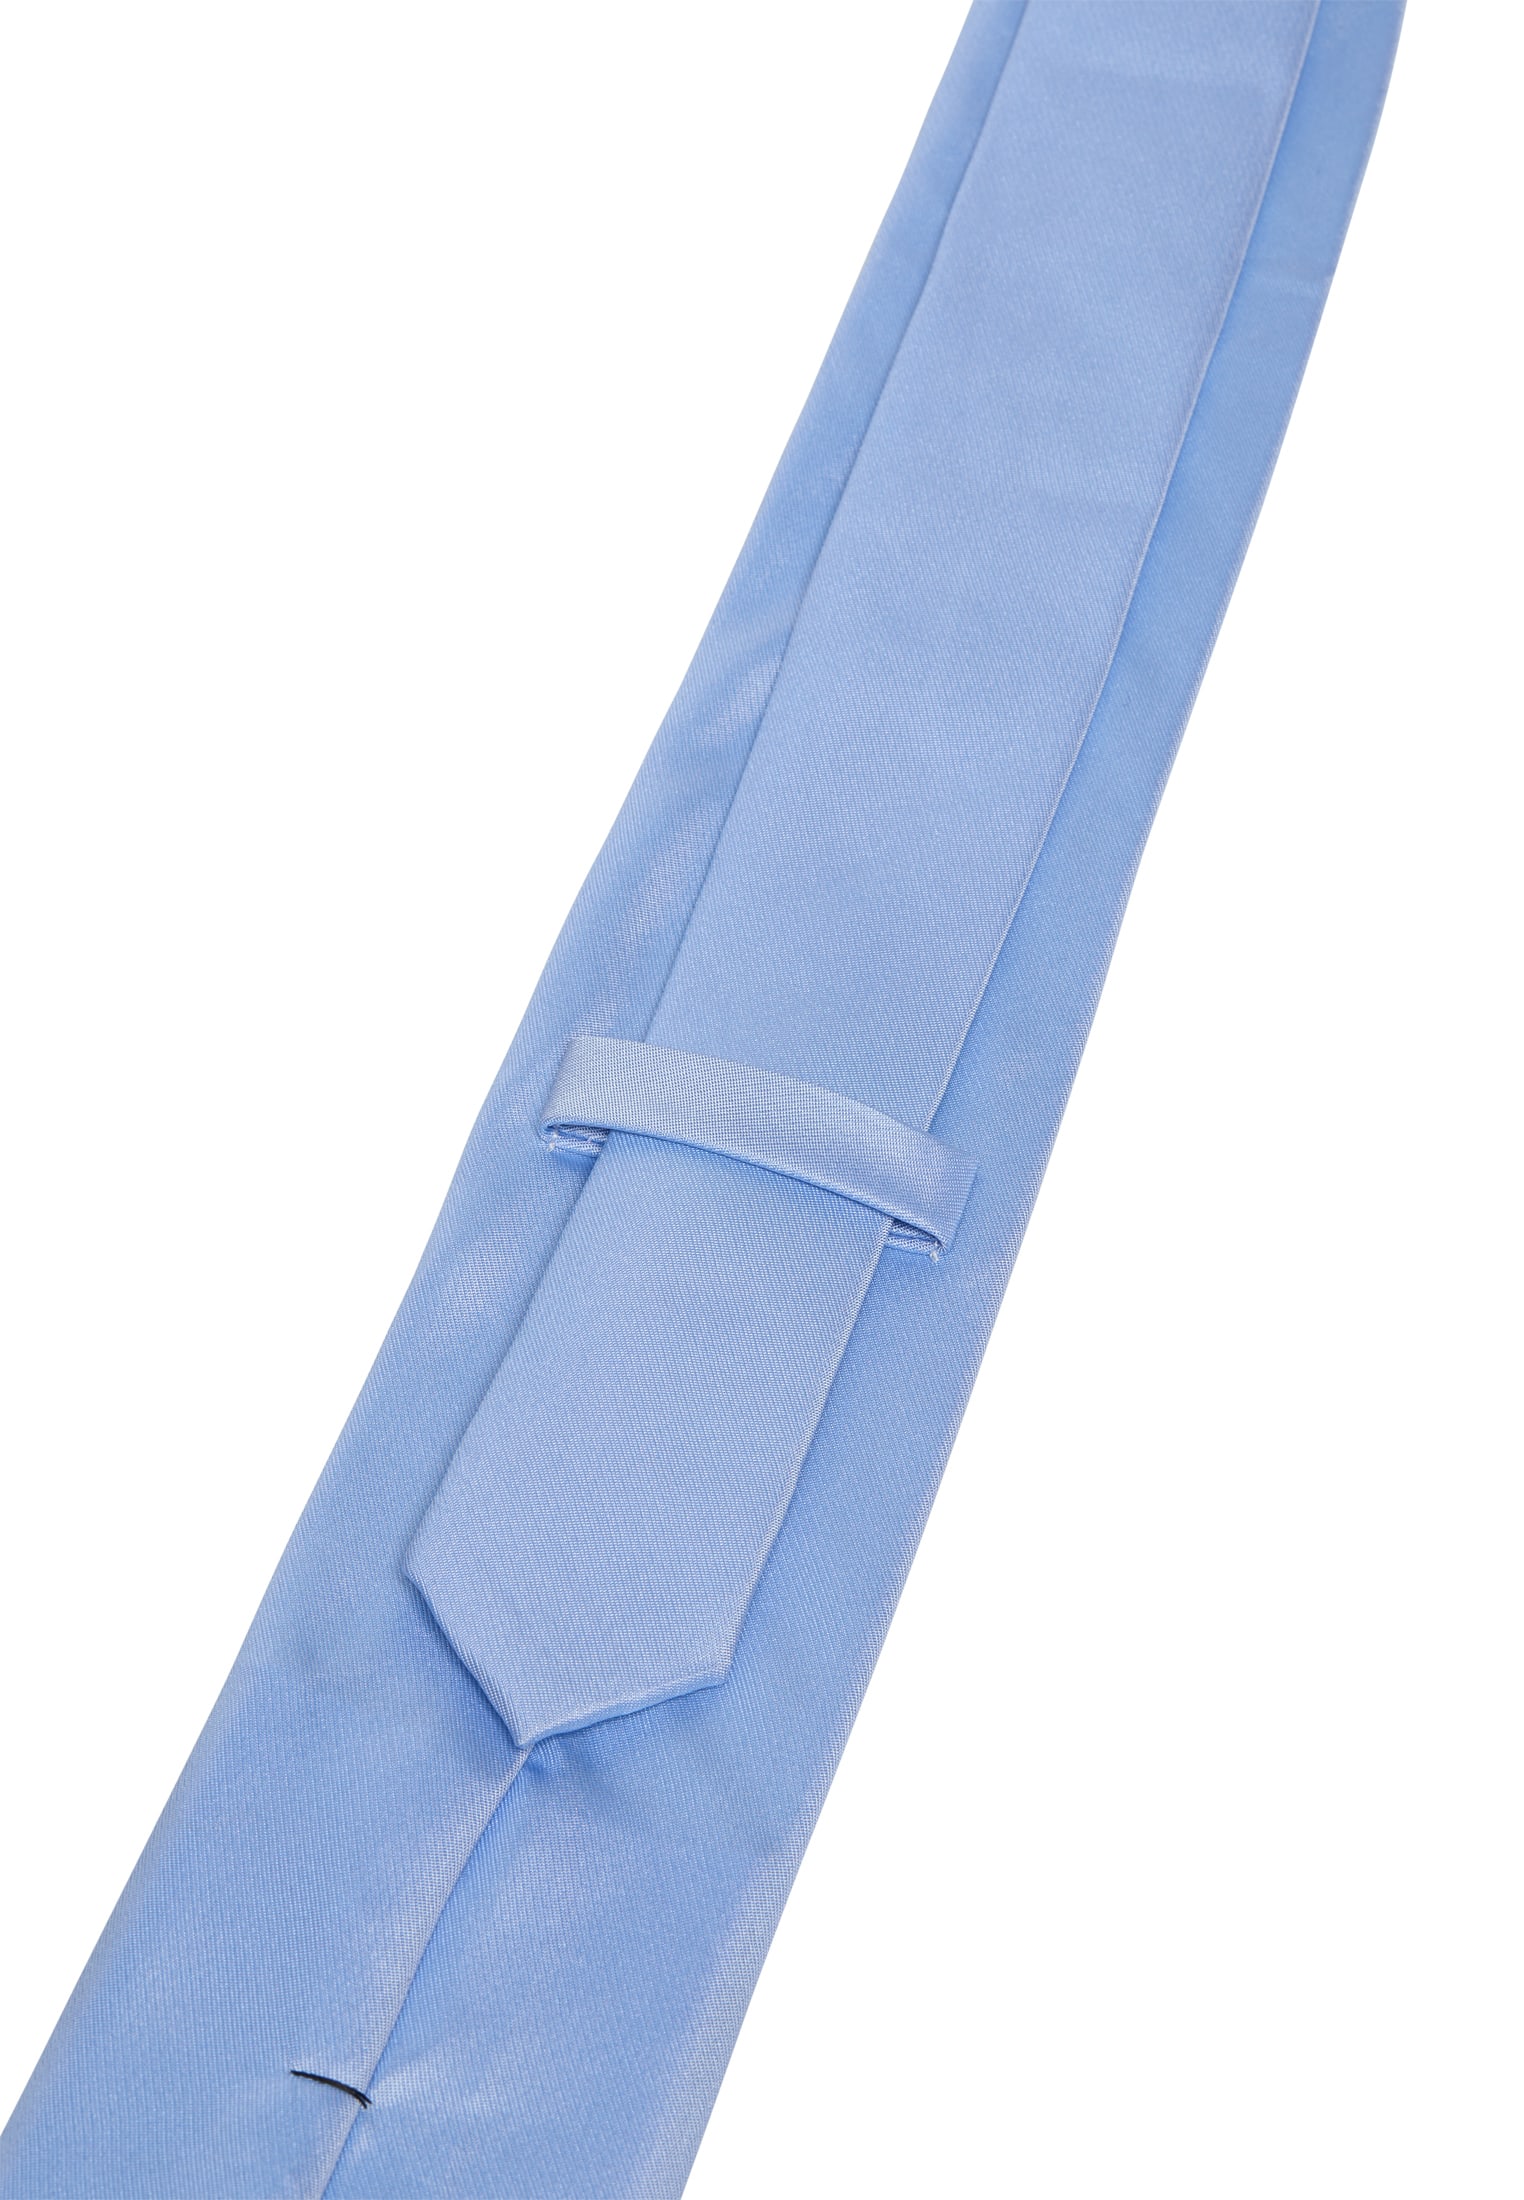 Krawatte in blau unifarben | blau | 142 | 1AC02086-01-41-142 | Breite Krawatten